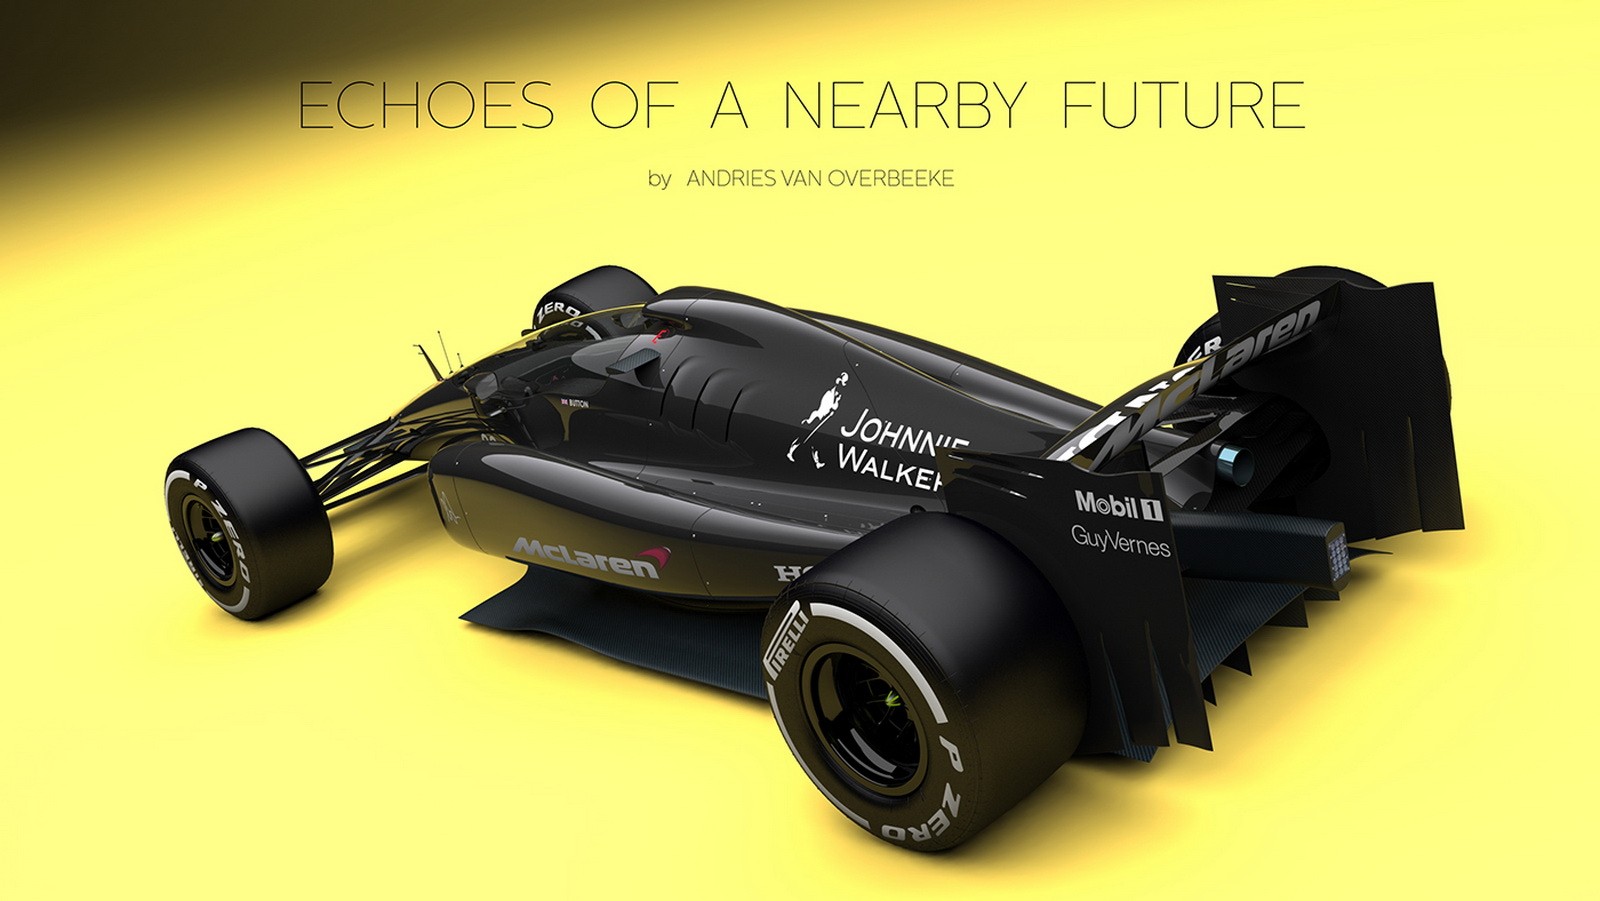 future-formula-1-concept-earns-closed-cockpit-honda-mclaren-livery-photo-gallery_20